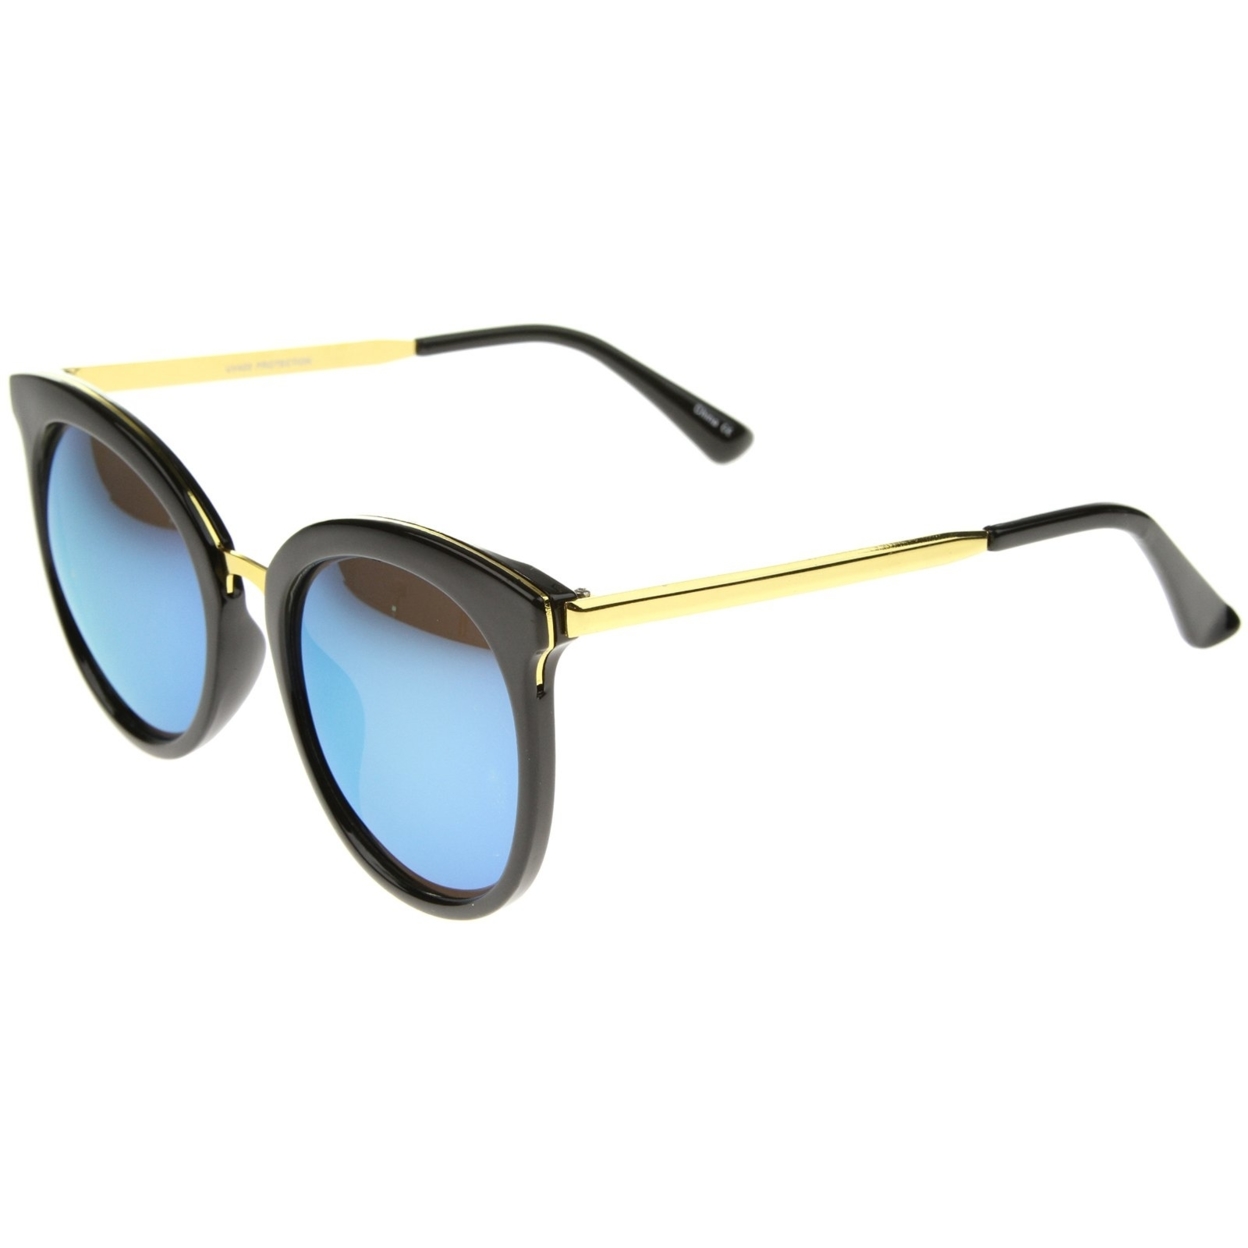 Womens Fashion Oversized Mirrored Lens Round Cat Eye Sunglasses 56mm - Black-Gold / Magenta Mirror